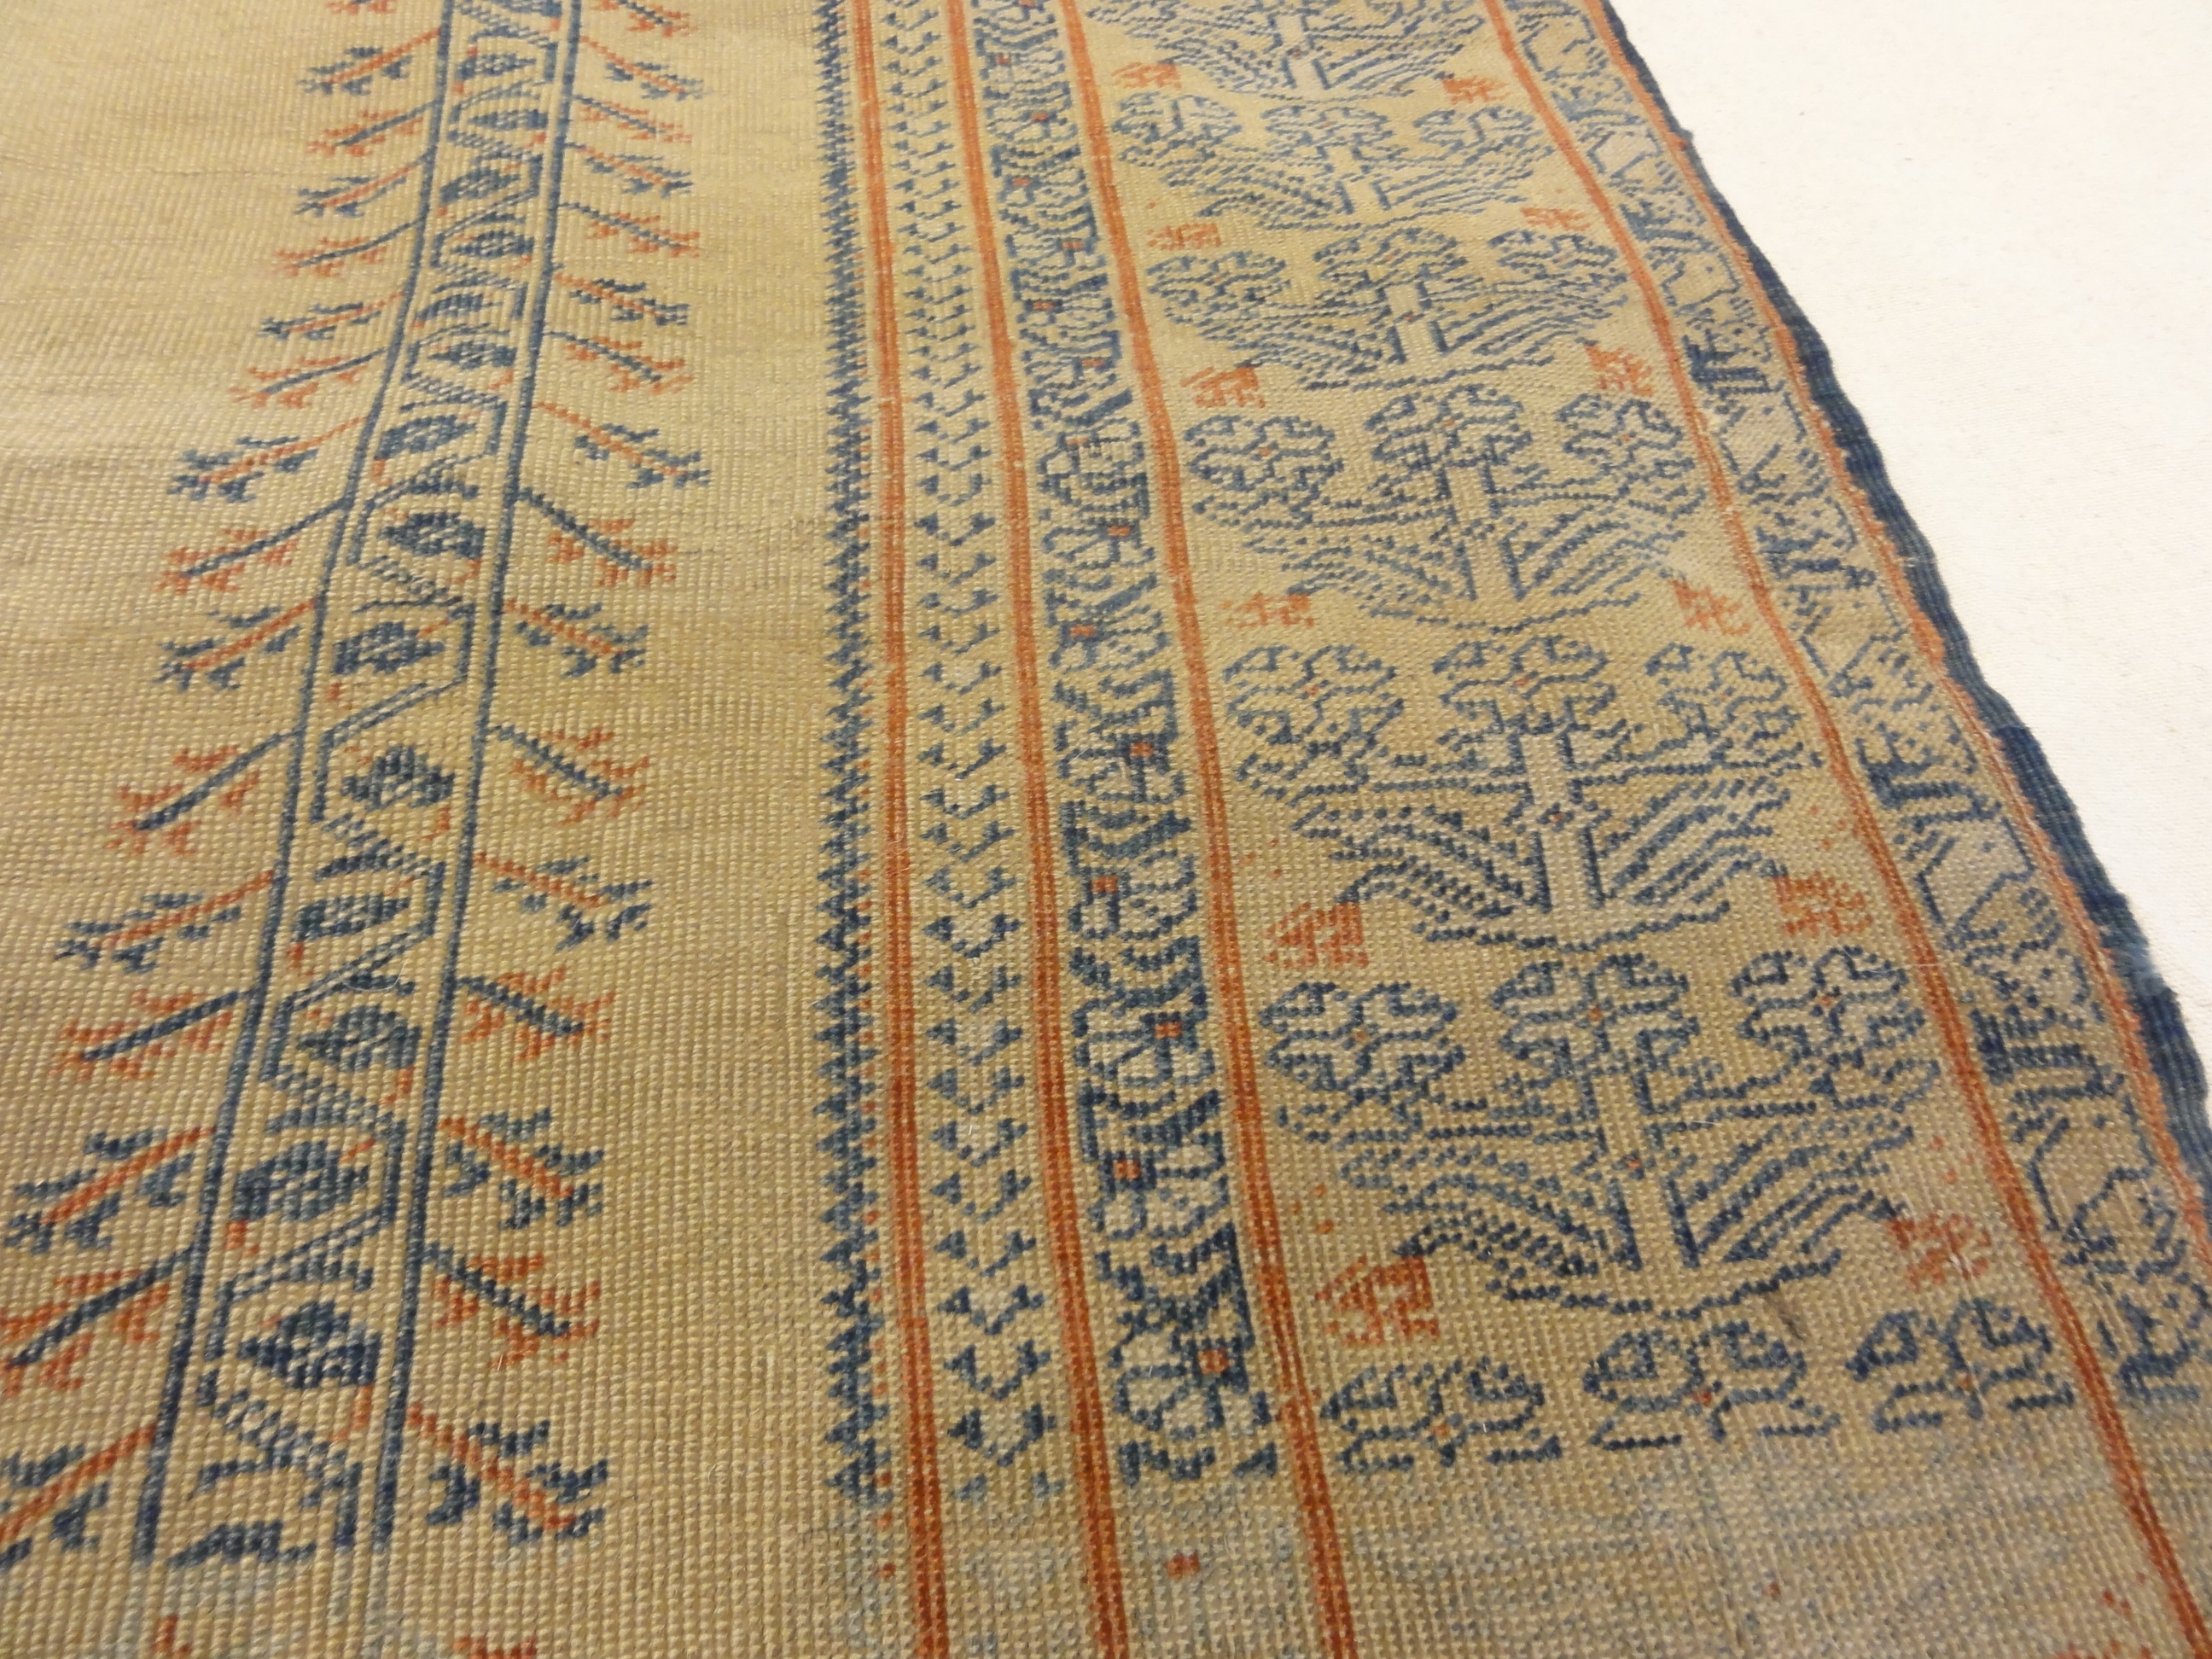 Antique Transylvanian 17th Century Turkish Prayer Rug. A fine piece of genuine woven carpet art sold at the Santa Barbara Design Center.